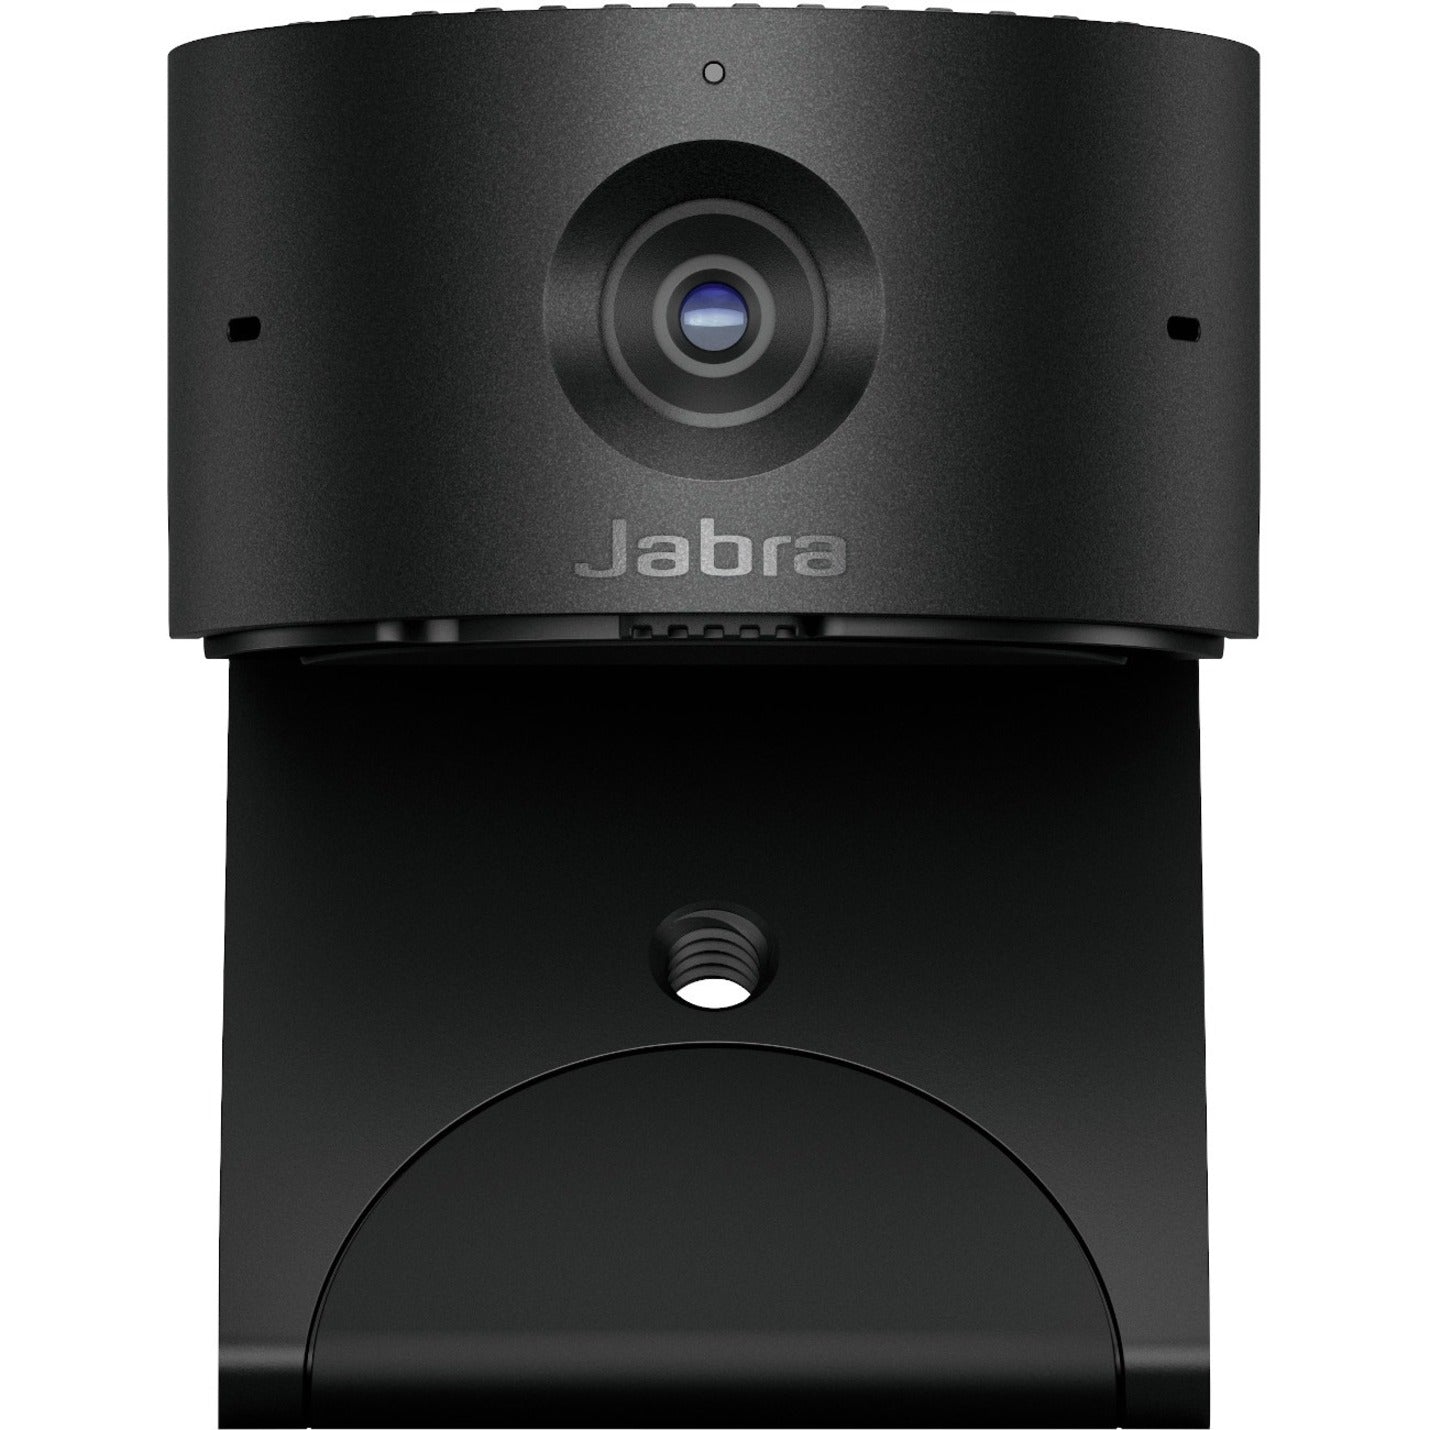 Jabra PanaCast Video Conferencing Camera - 13 Megapixel - 30 fps - USB 3.0 Type C (8300-119) Front image